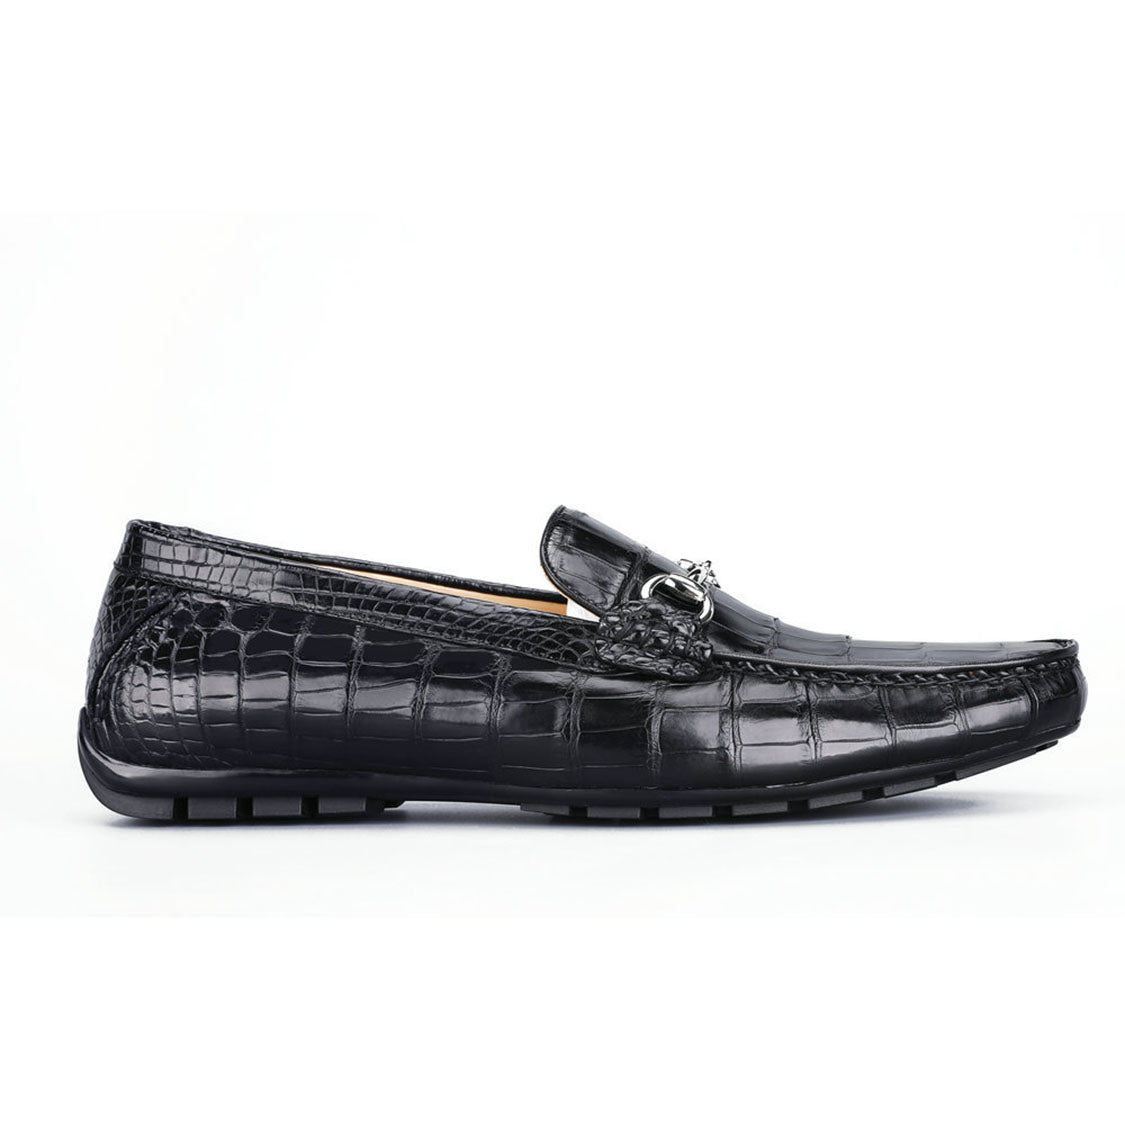 Men's Shoes Genuine Crocodile Alligator Skin Leather Handmade Black, Brown Size 7 - Size 11US #8689